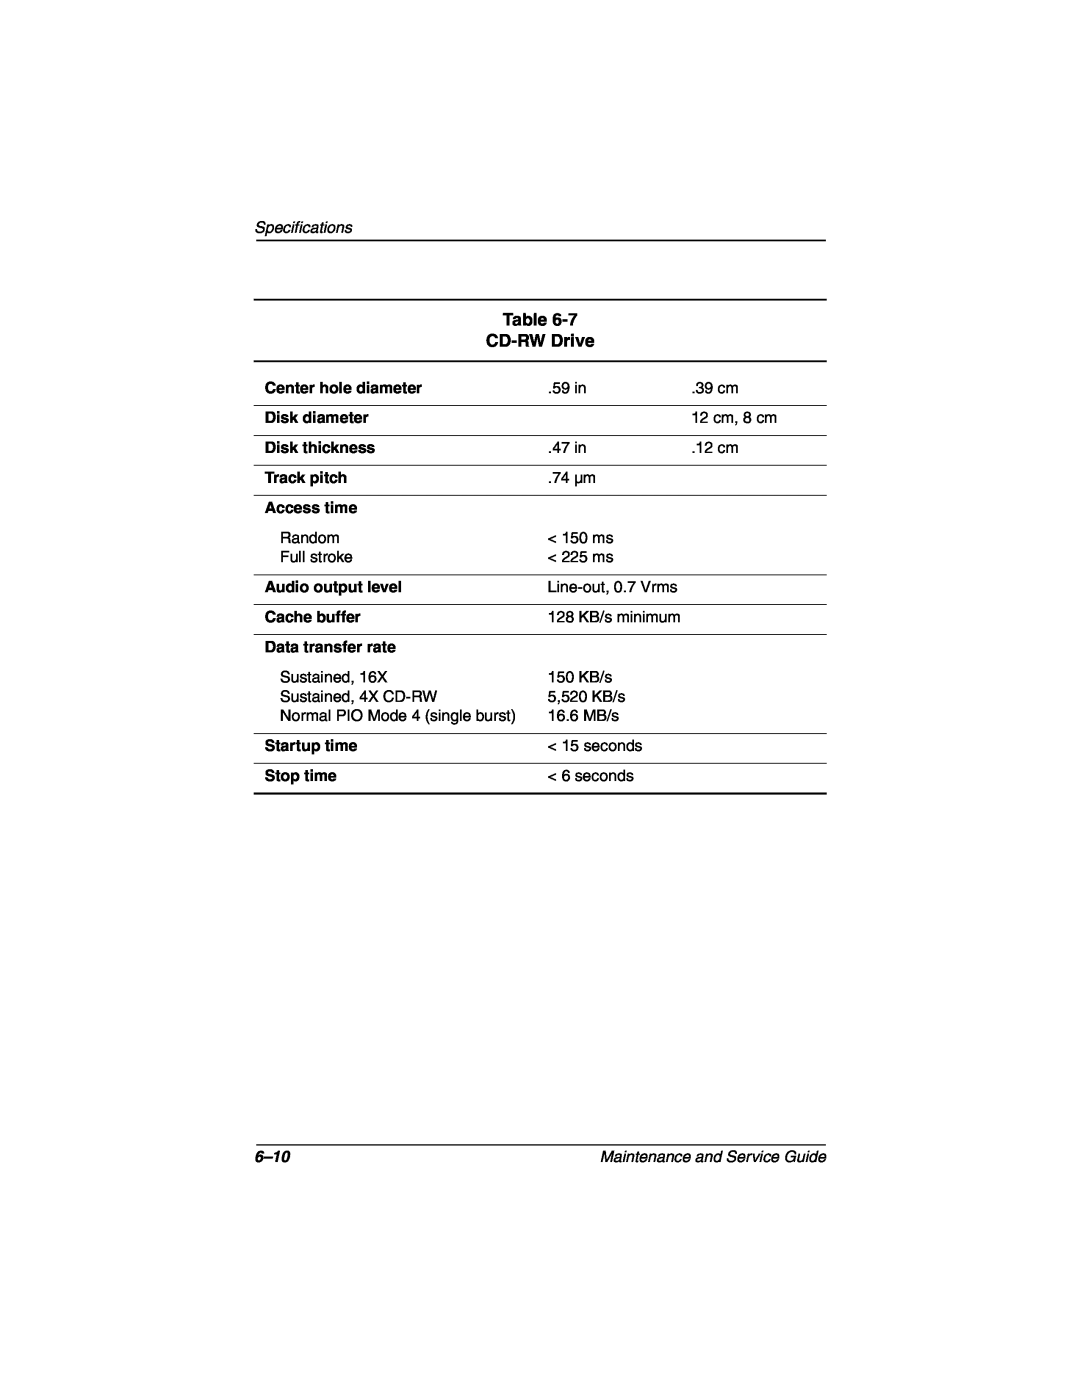 Compaq N160 manual CD-RW Drive, Specifications, 6-10 